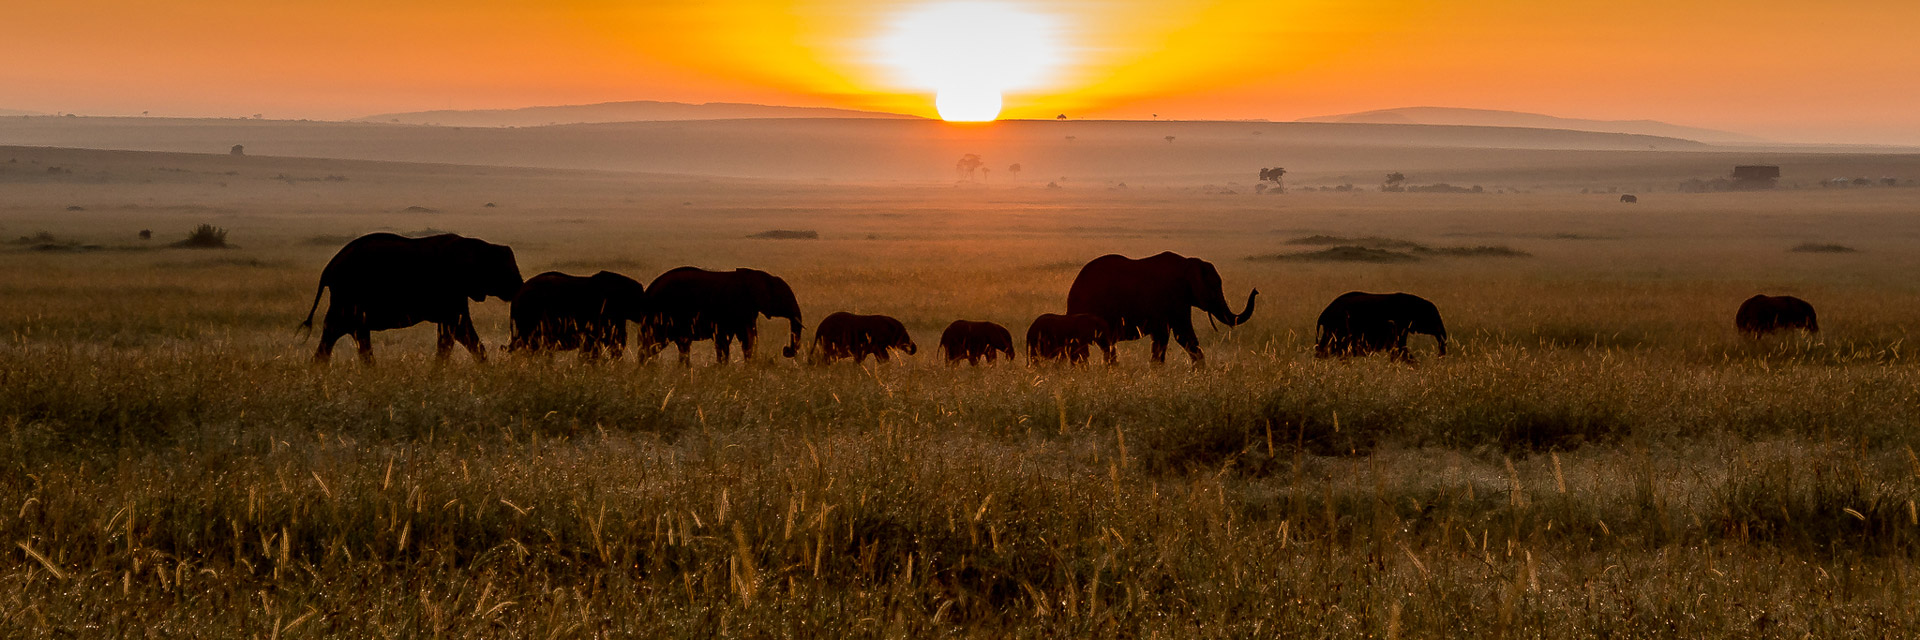 Elephant at sunrise in the Maasai Mara